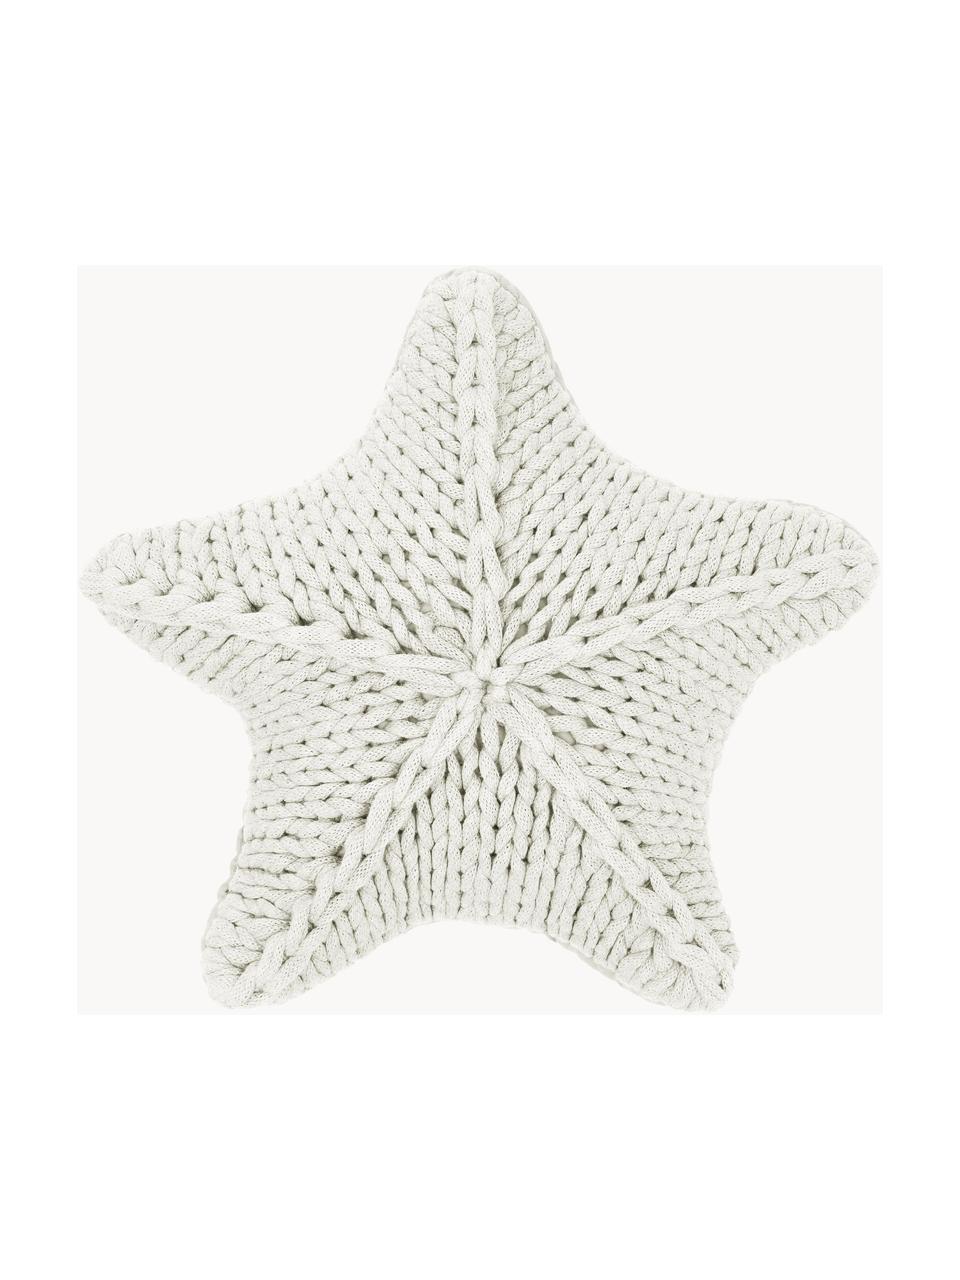 Cuscino a maglia grossa bianca Sparkle, Rivestimento: 100% cotone, Bianco, Larg. 45 x Lung. 45 cm